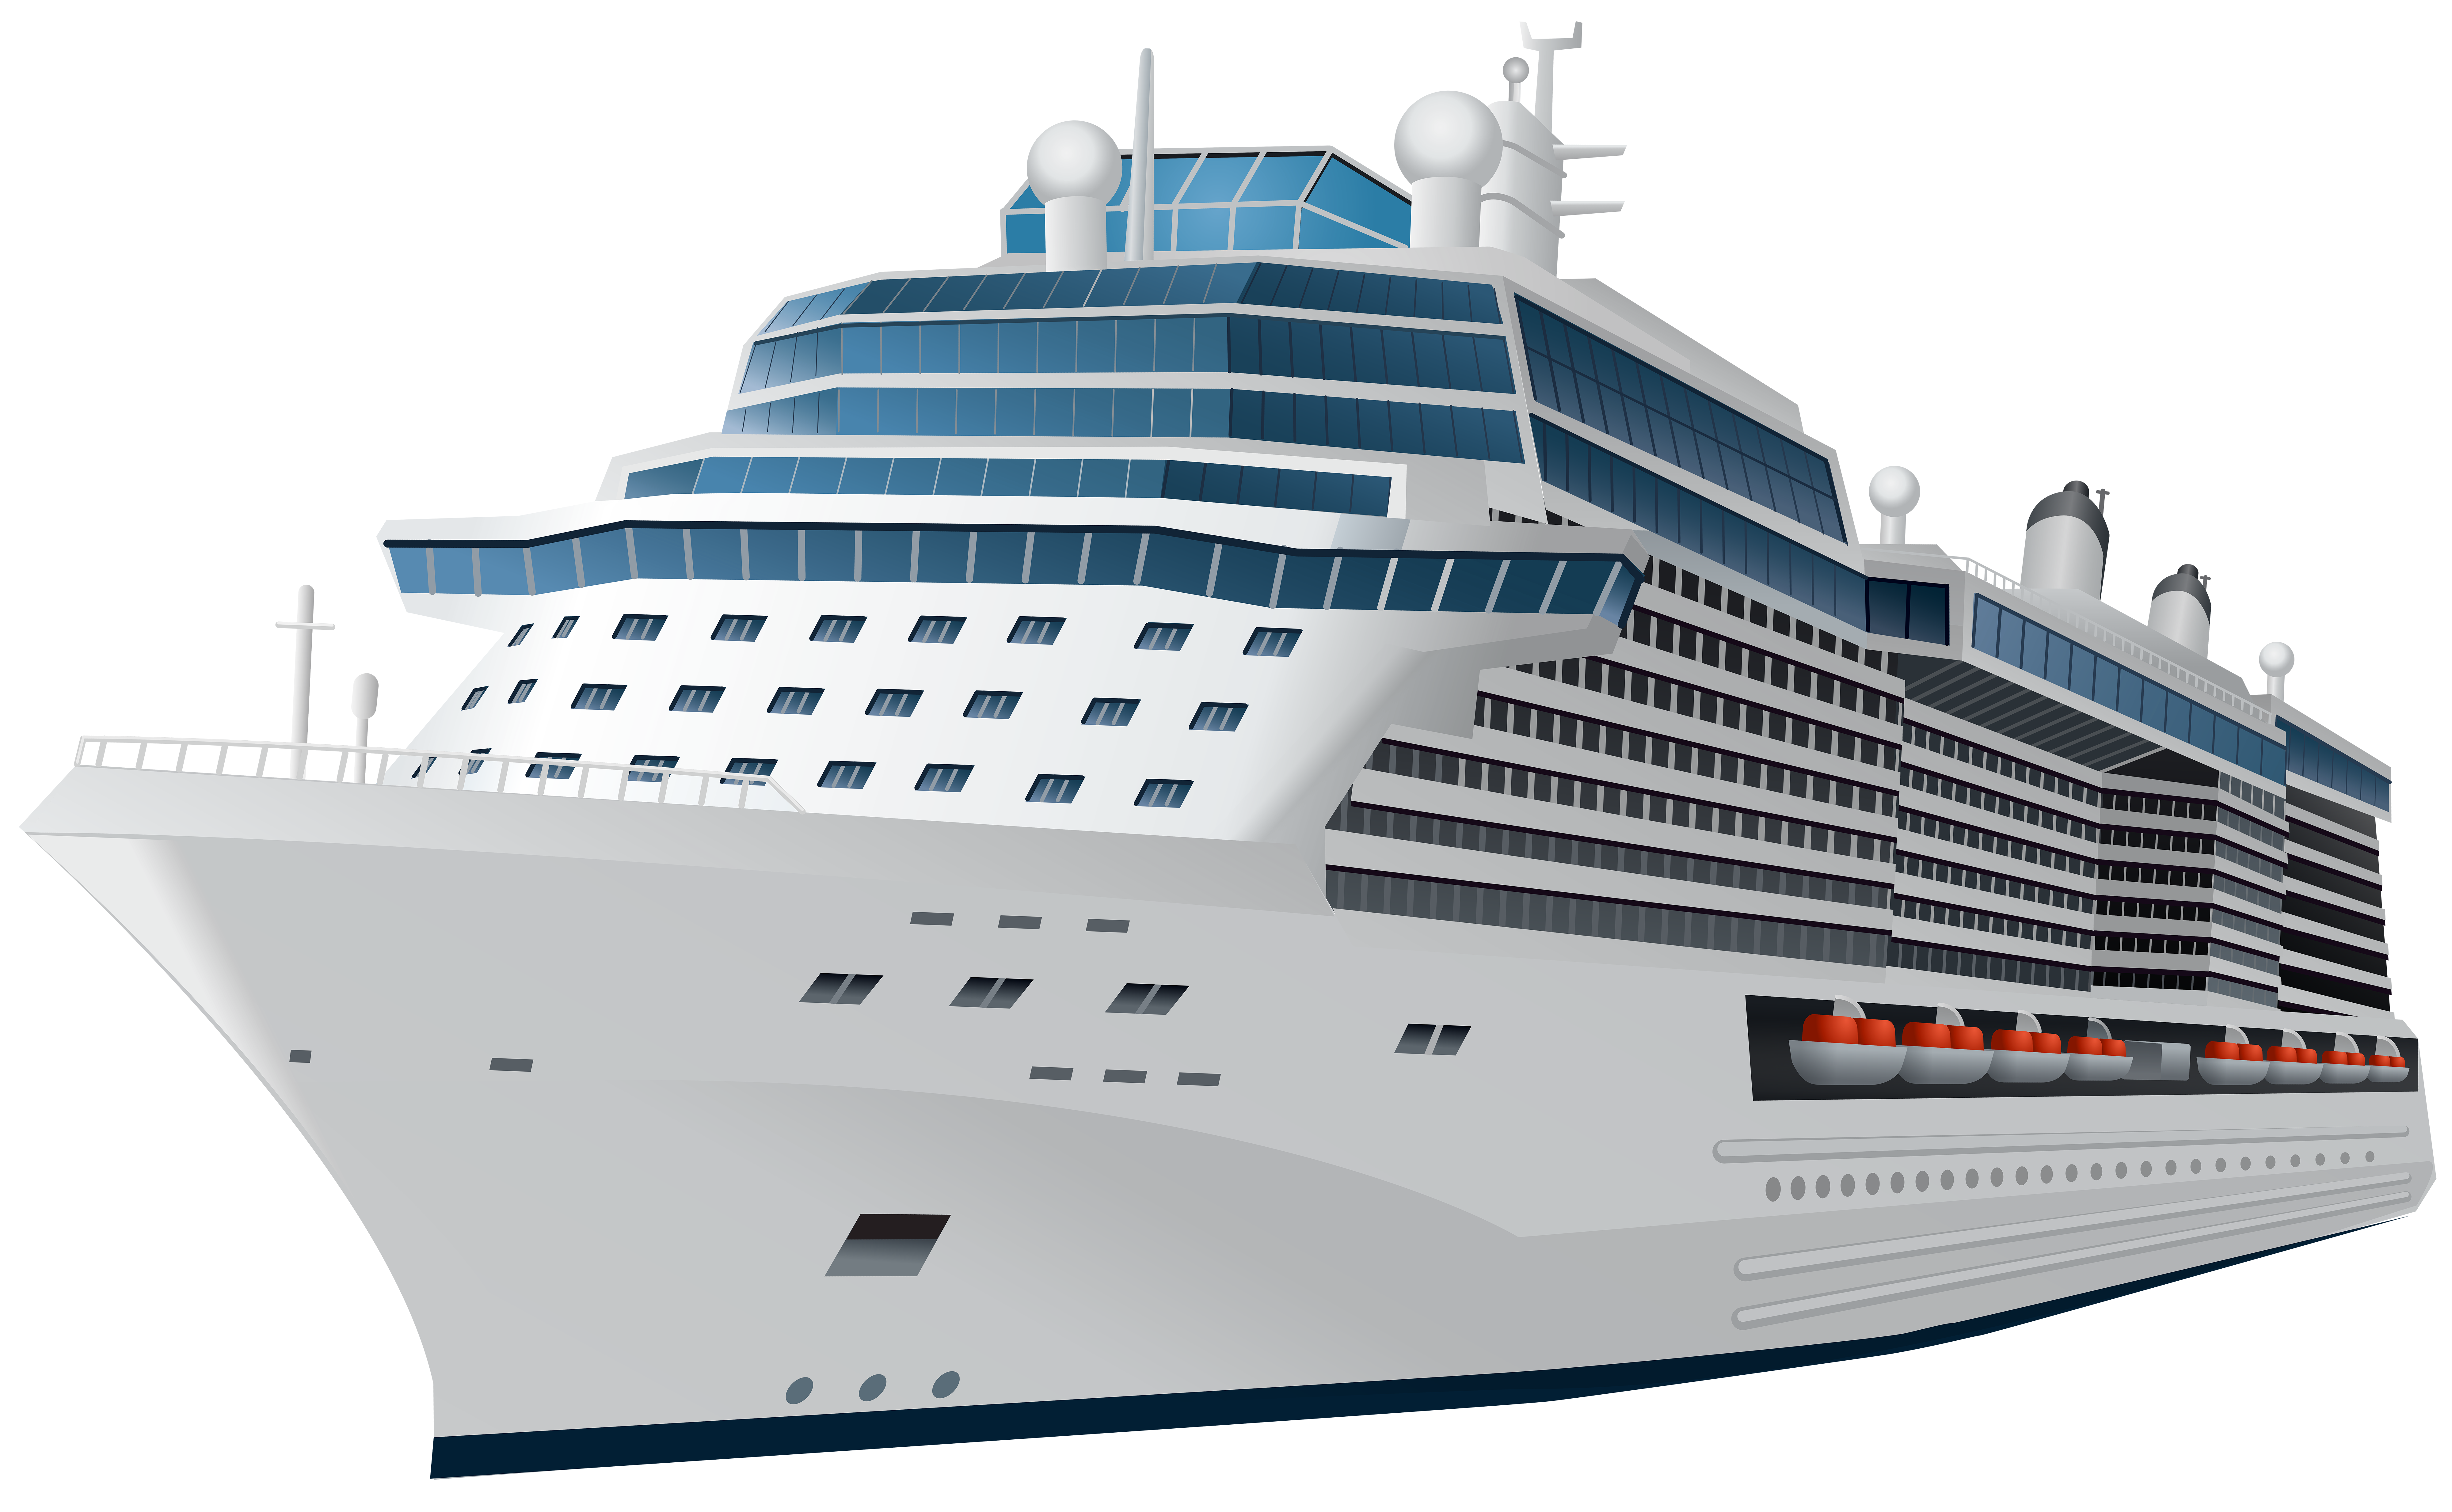 free cruiseship clipart